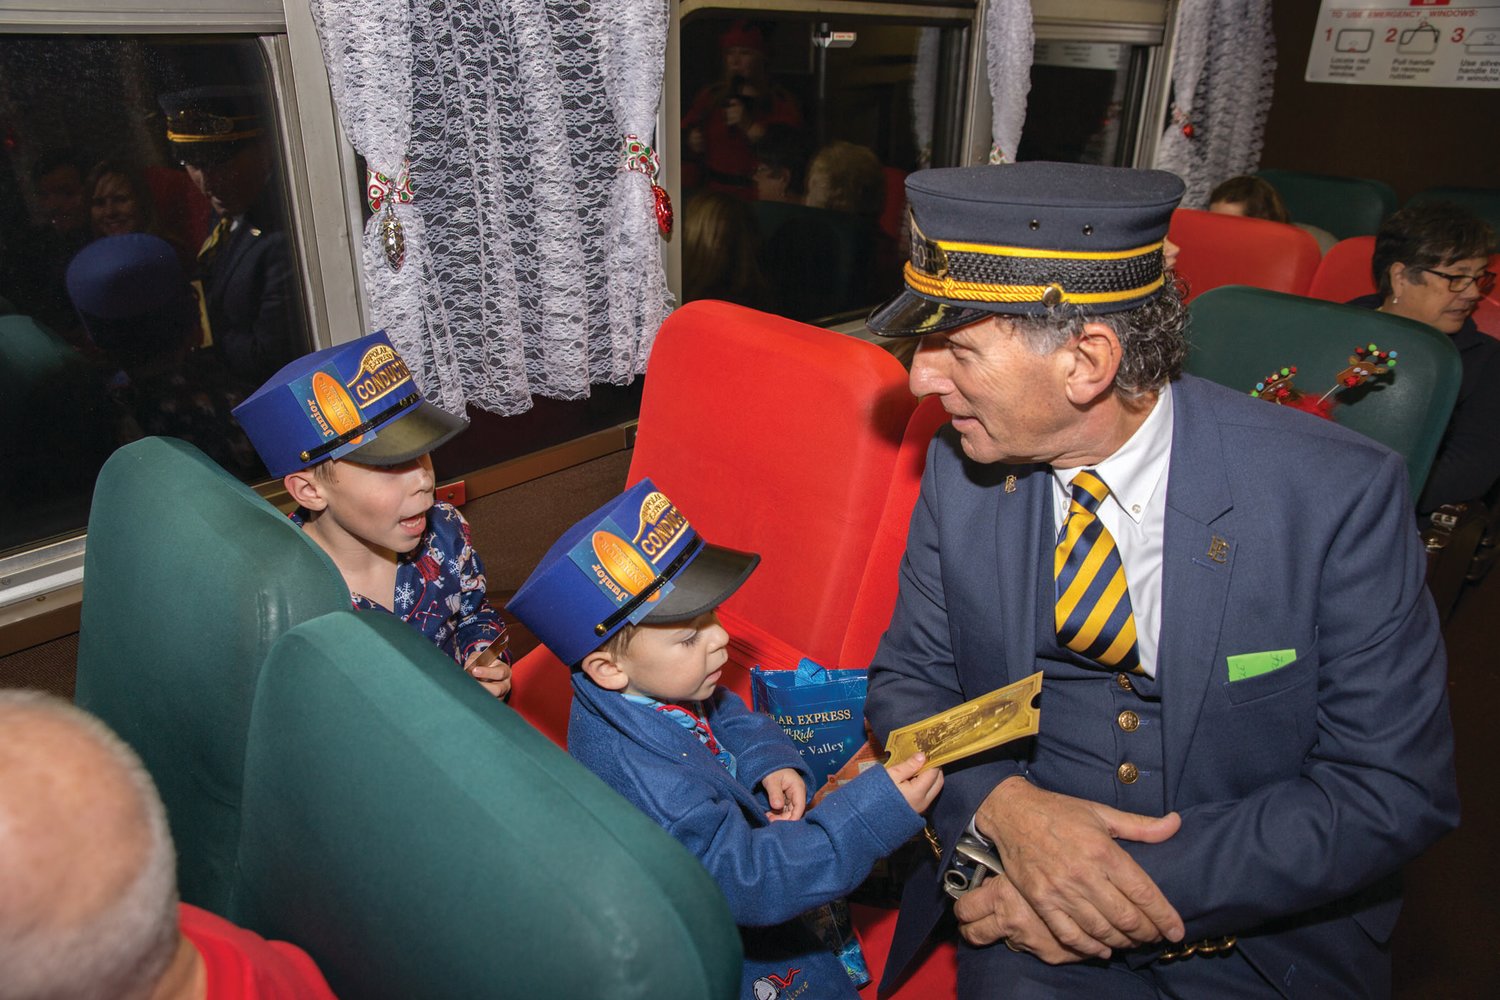 ALL ABOARD! Conductor Bob and junior conductors share a moment aboard the Blackstone Valley Polar Express Train Ride.